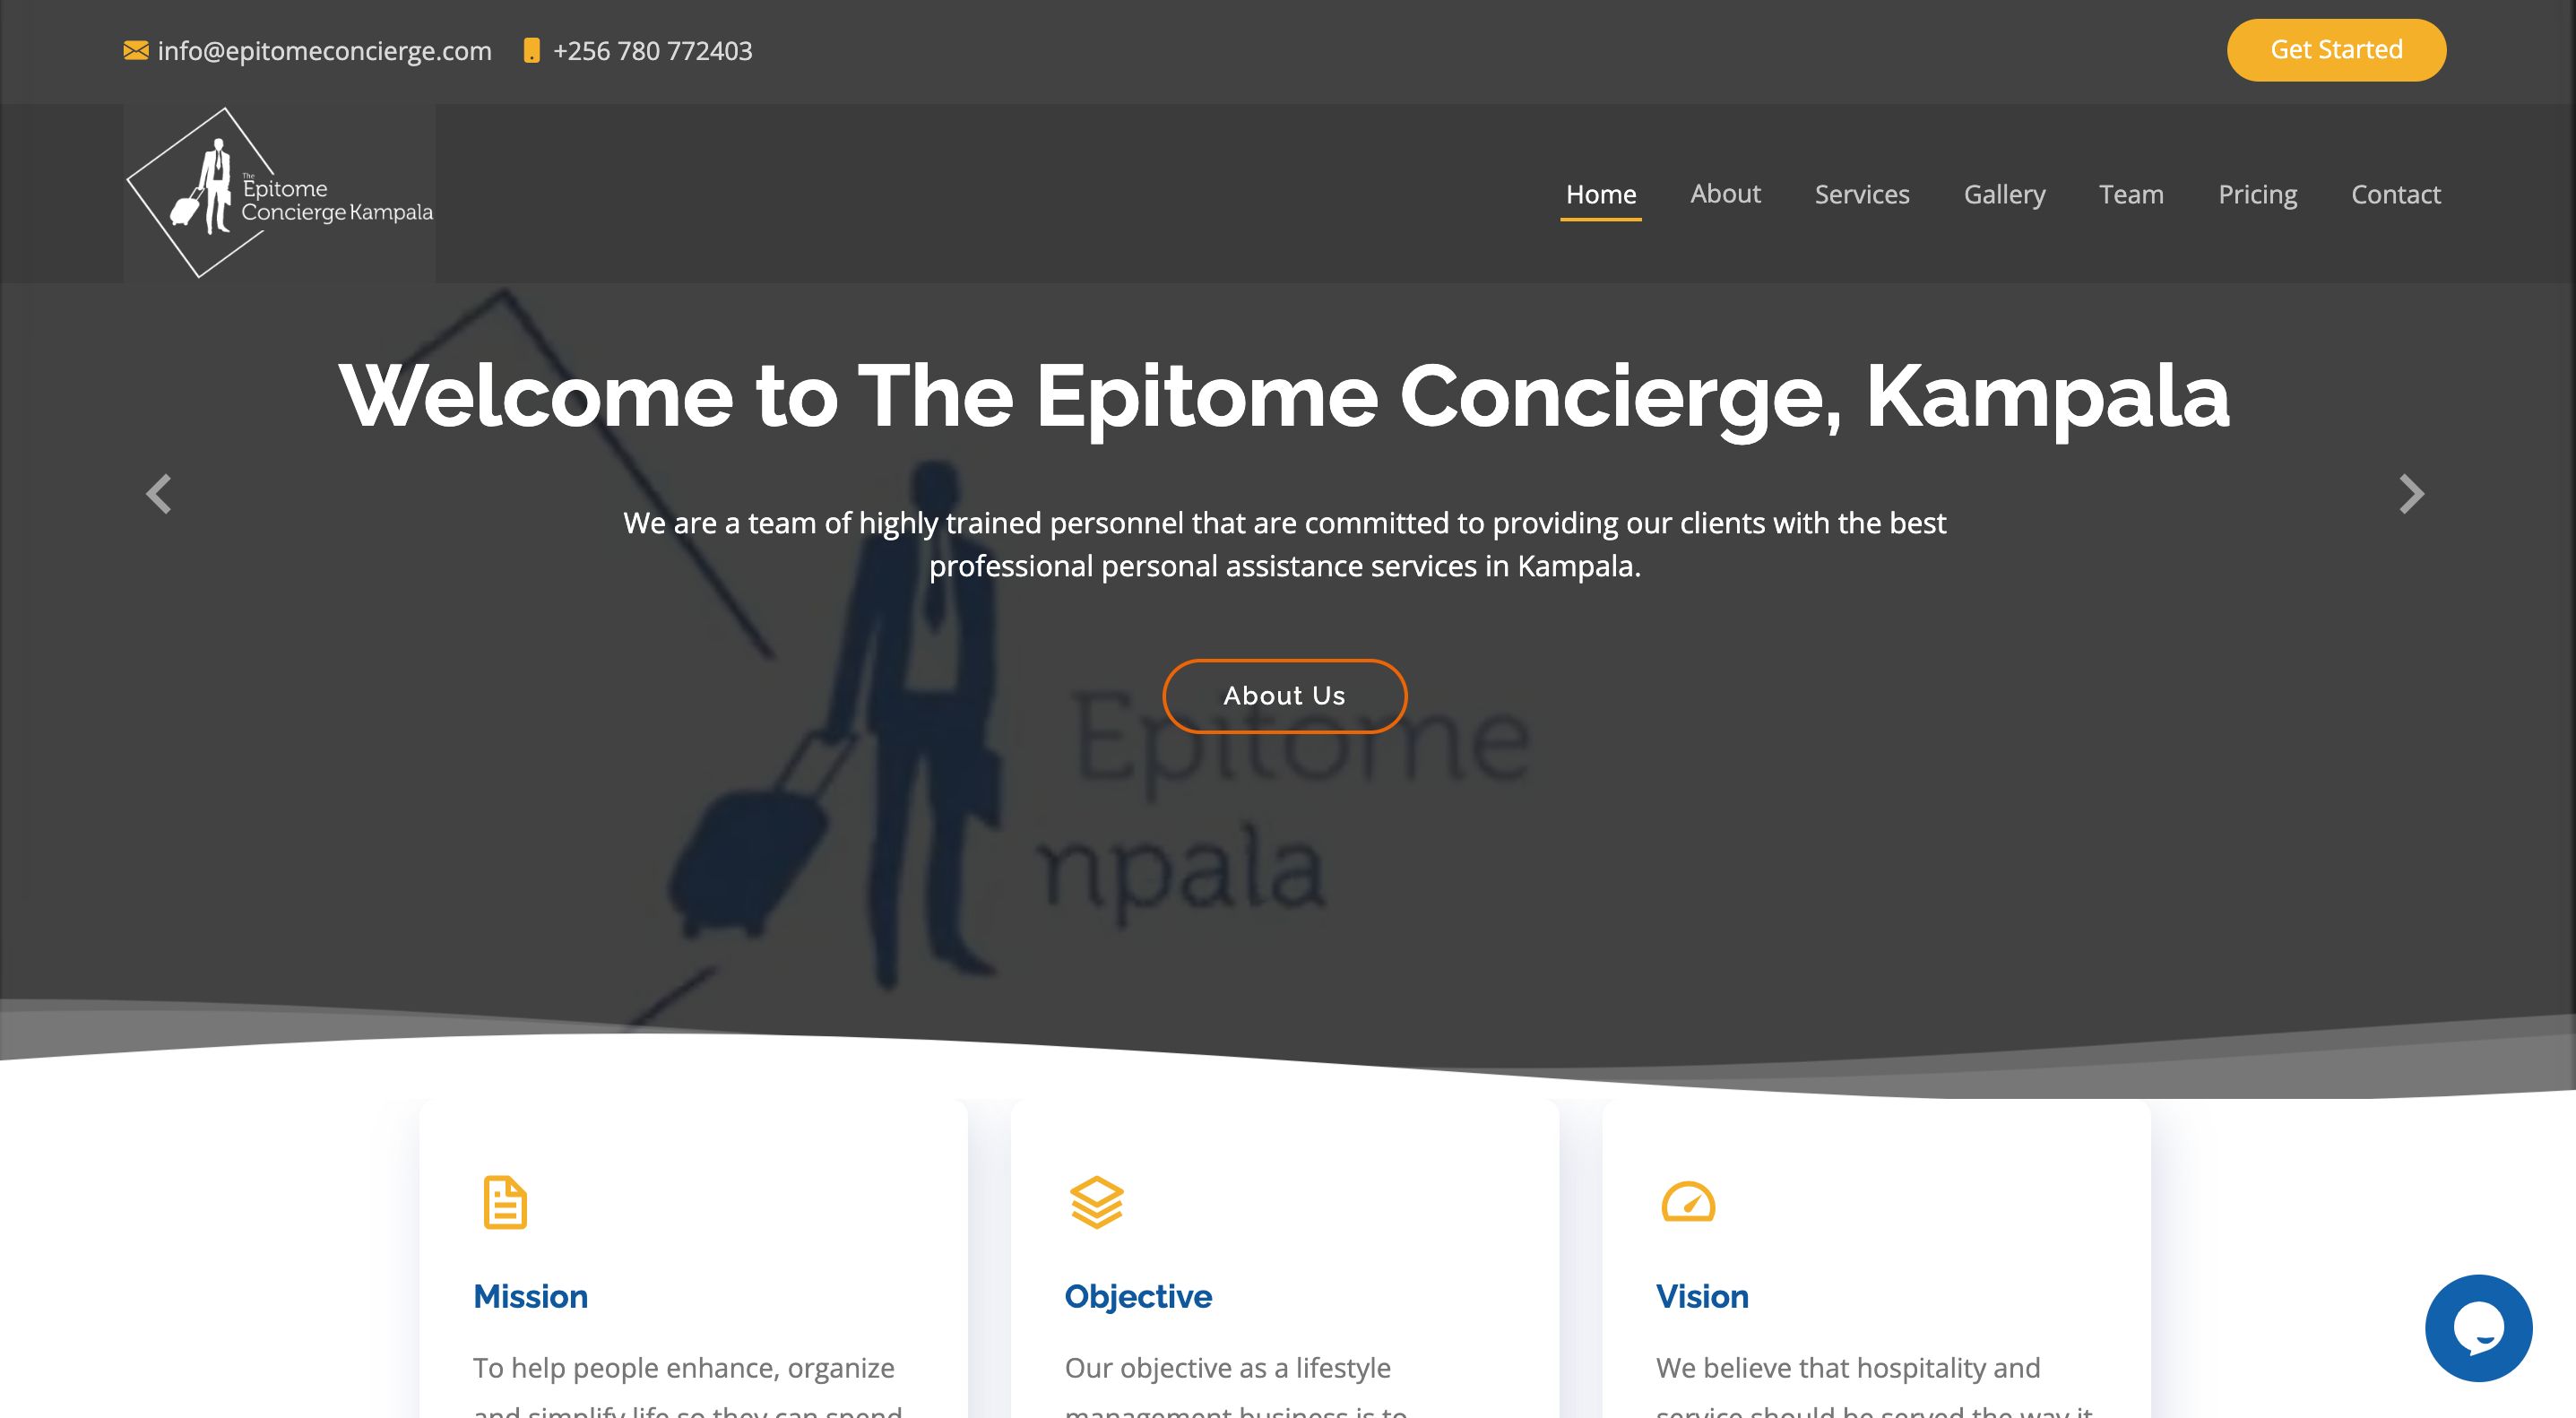 Epitome Concierge Kampala